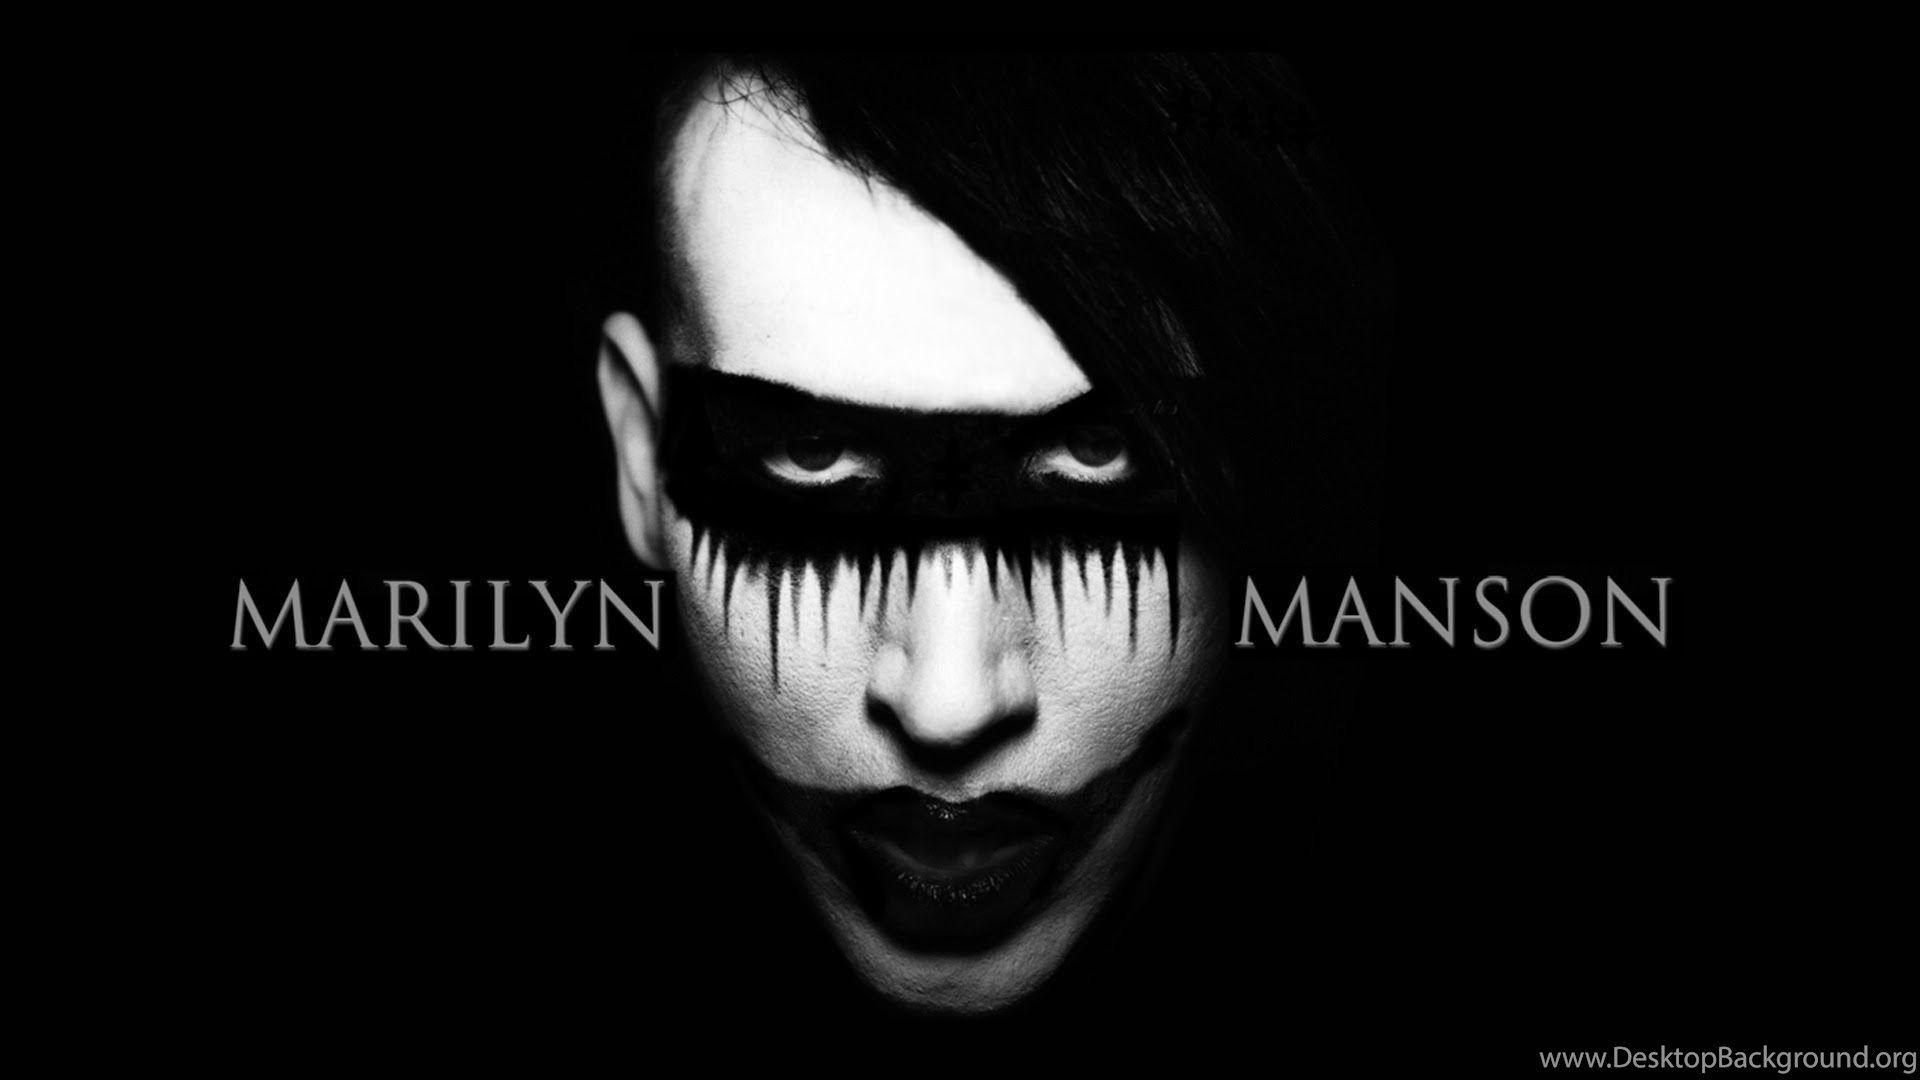 HD Quality Marilyn Manson Wallpaper Widescreen 17 Music Celebrity